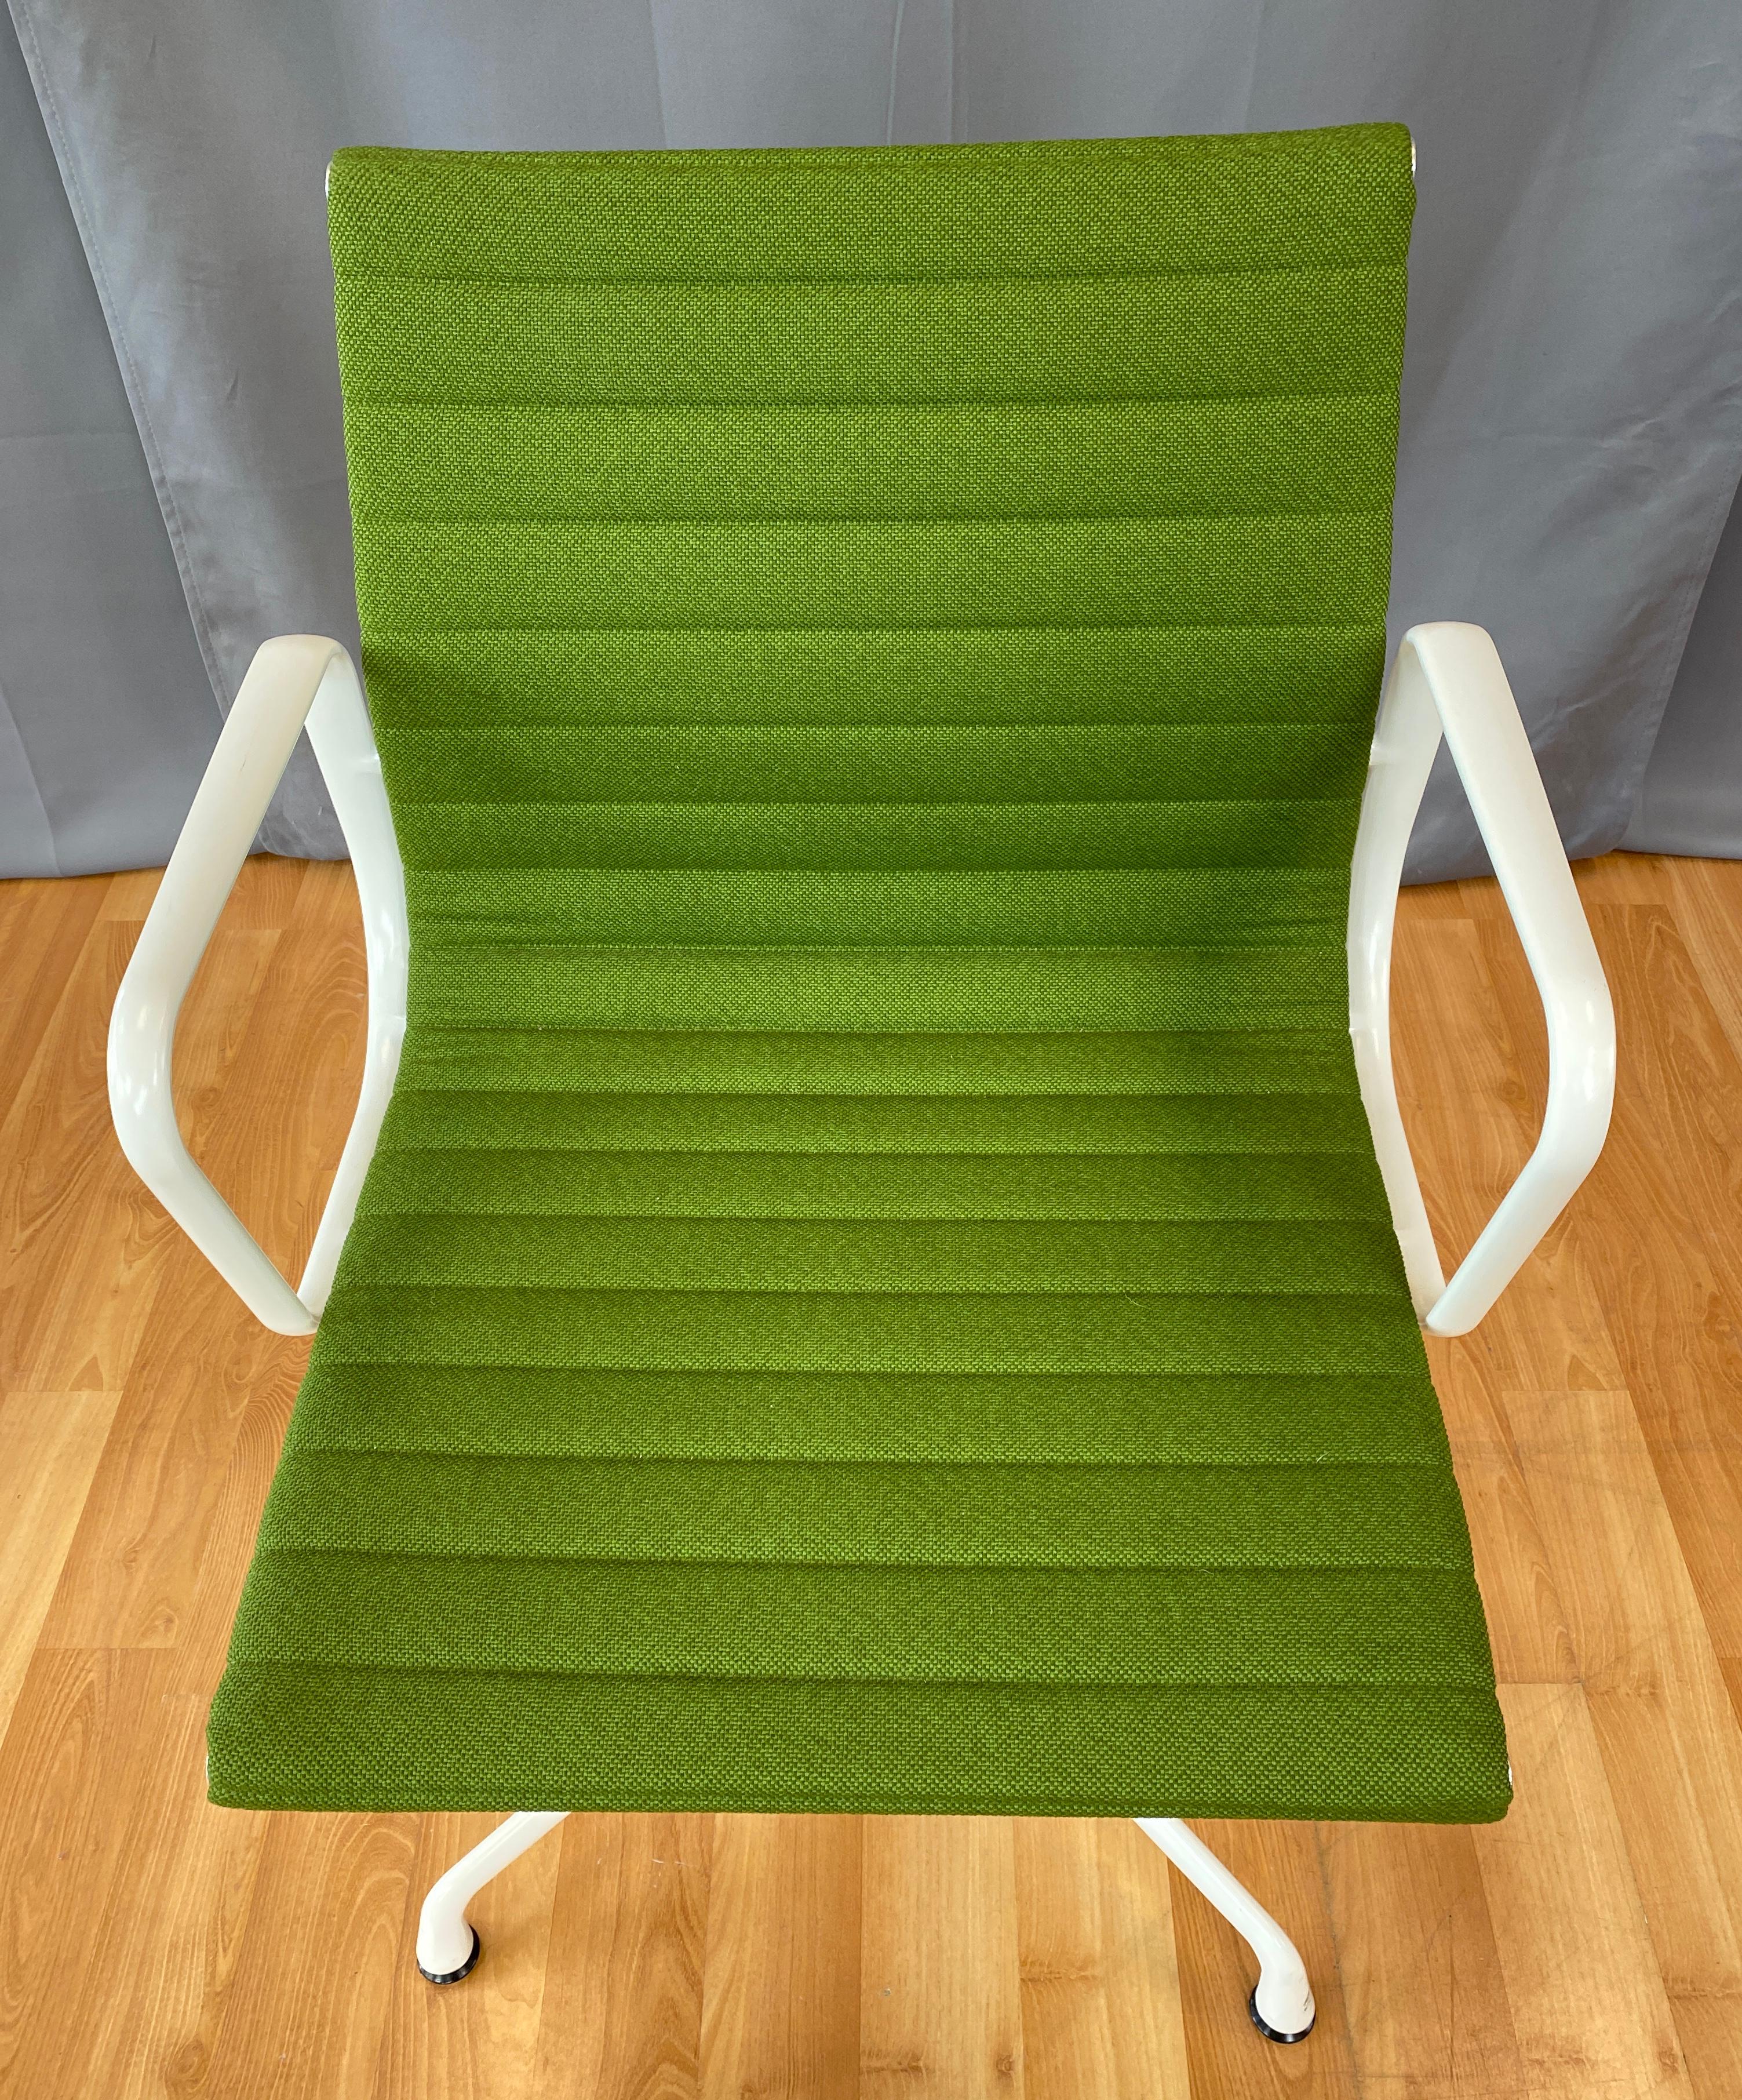 American Eames Aluminum Group Side Chair, White Frame, Light Olive Green Upholstery